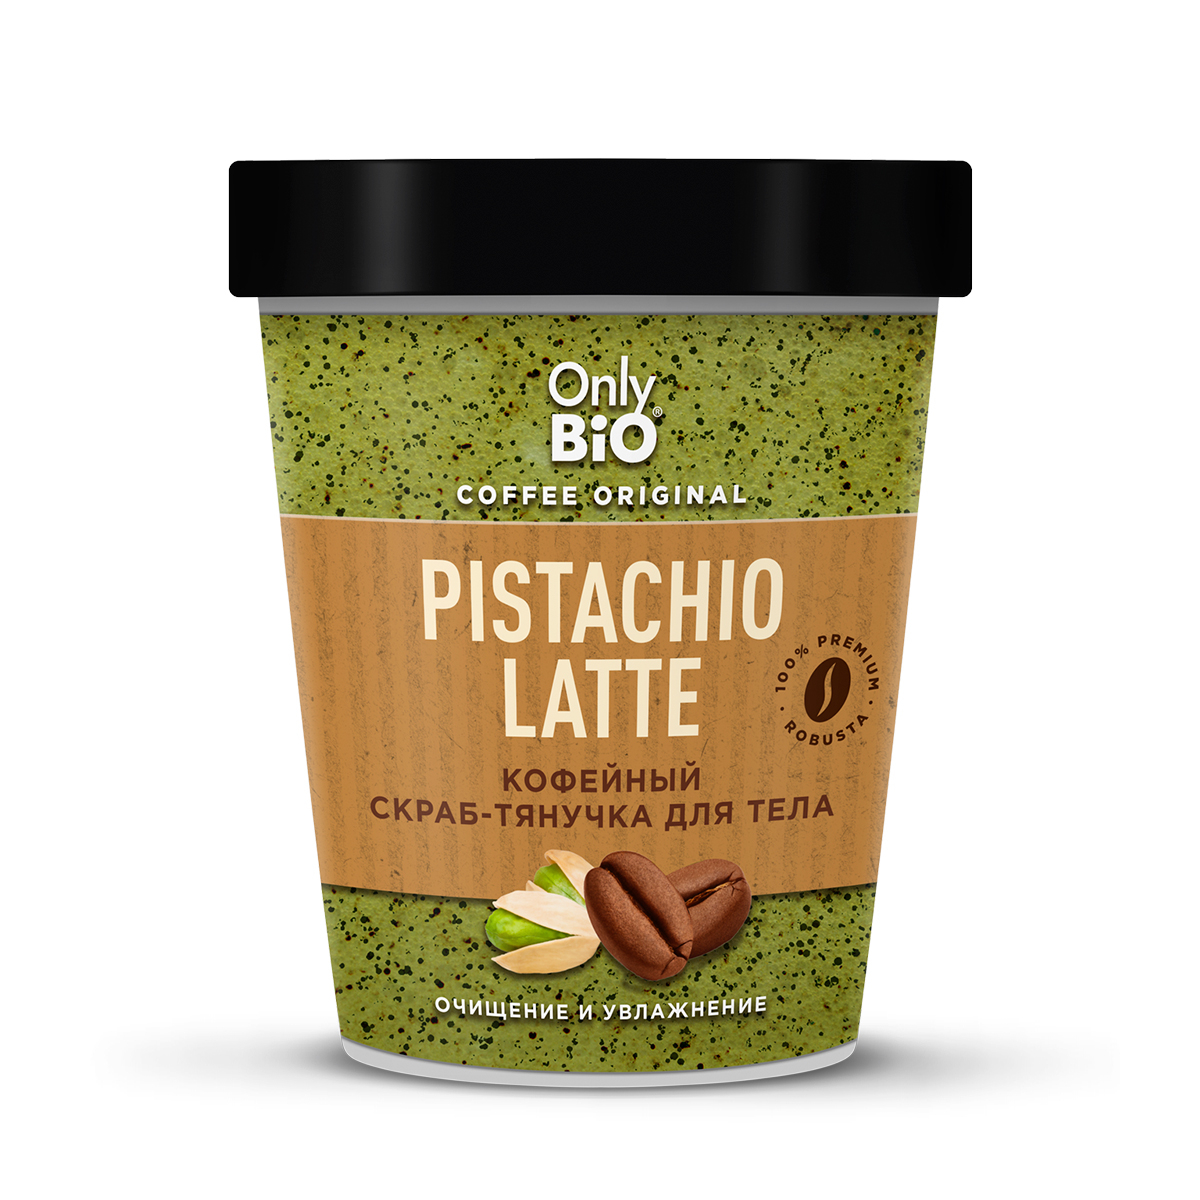 Скраб-тянучка для тела Only Bio Coffee Original Pistachio Latte кофейный, 230 мл скраб тянучка для тела only bio coffee original pistachio latte кофейный 230 мл